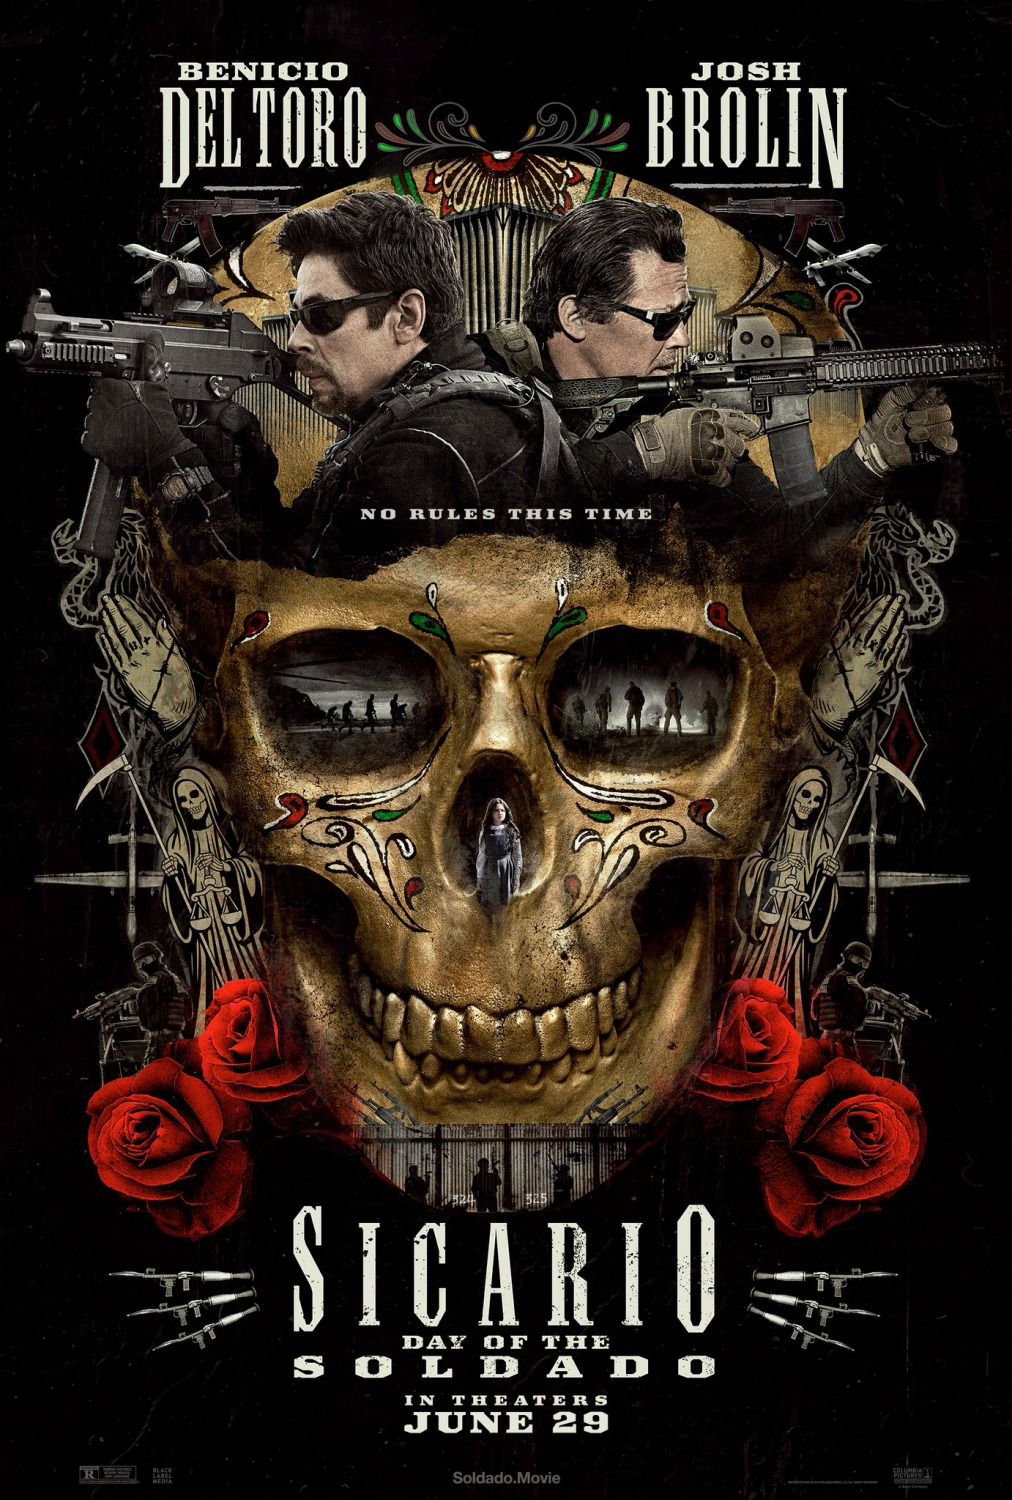 Sicario 2 Day of The Soldado (2018) ทีมพิฆาตทะลุแดนคนเดือด 2